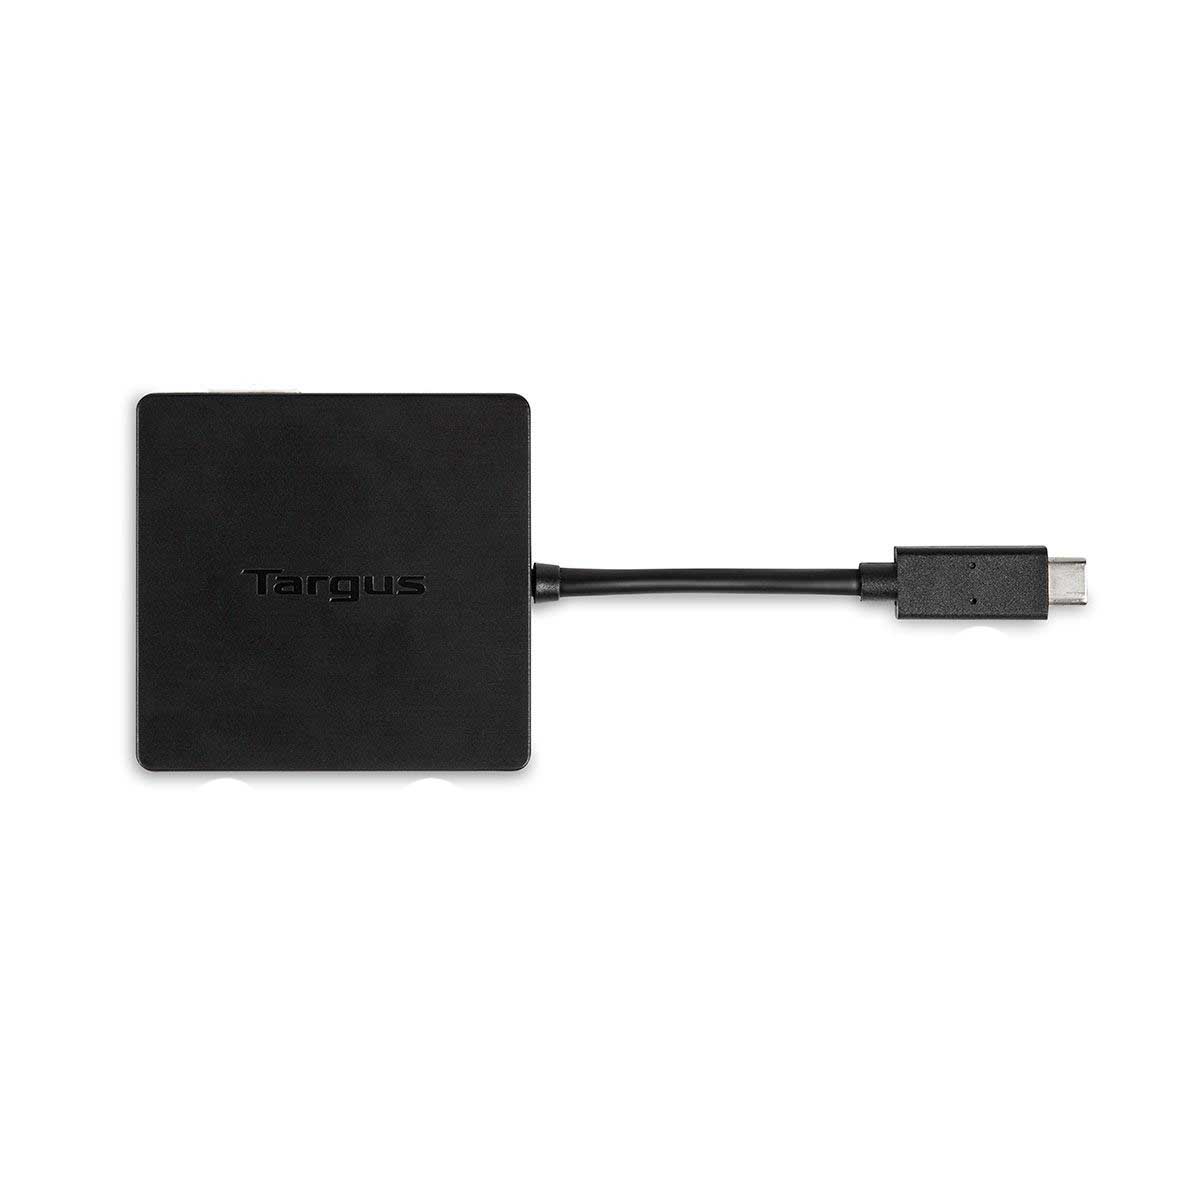 Targus USB-C Alt-Mode Travel Docking Station DOCK411EUZ - Black